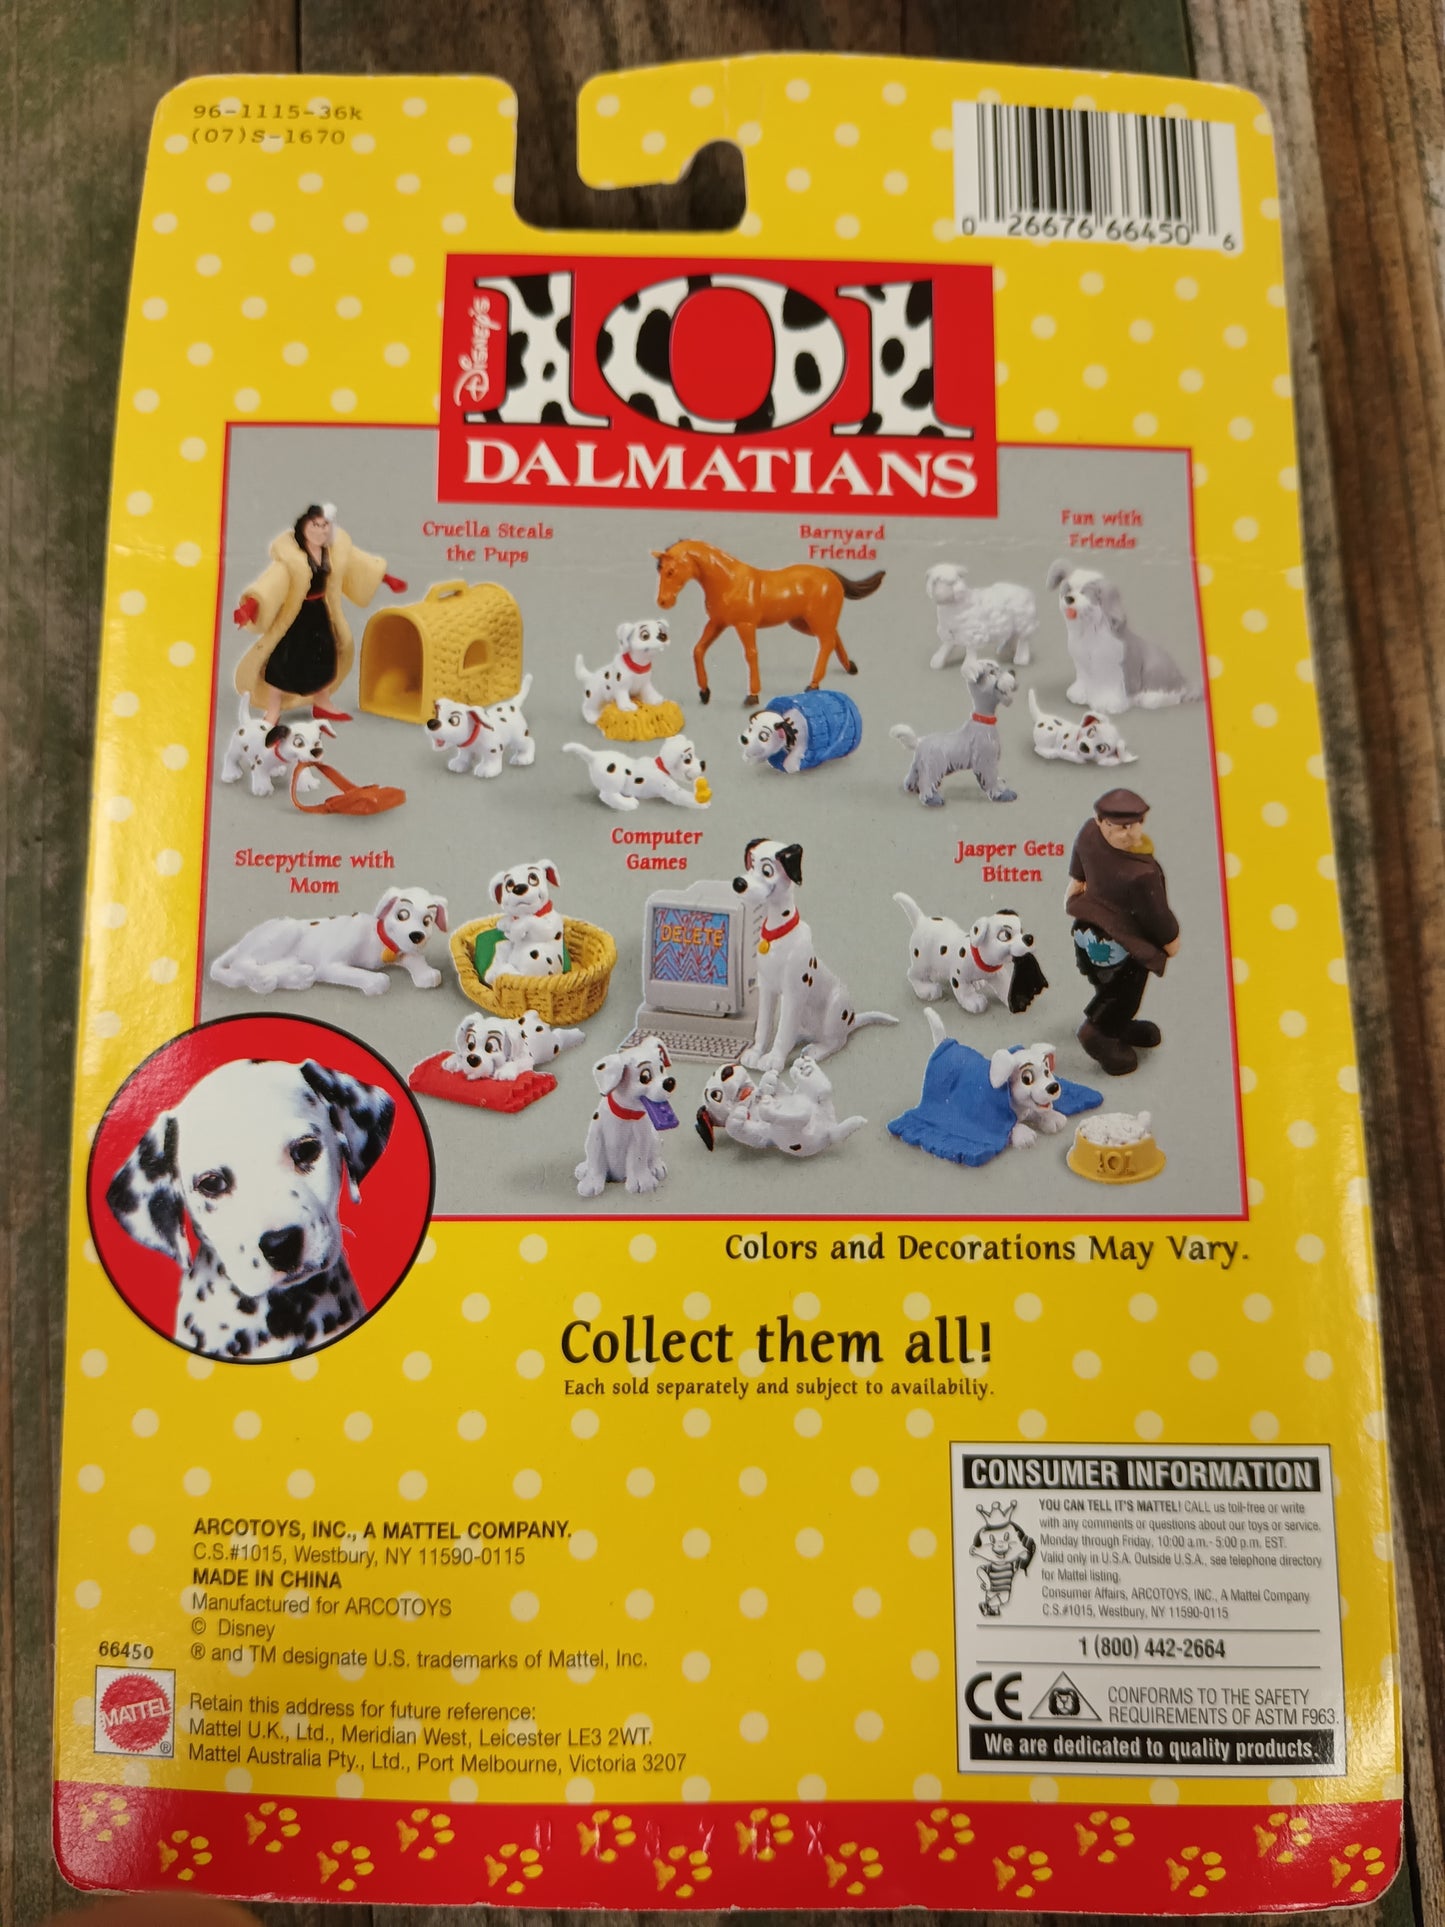 *101 Dalmatians Jasper Gets Bitten